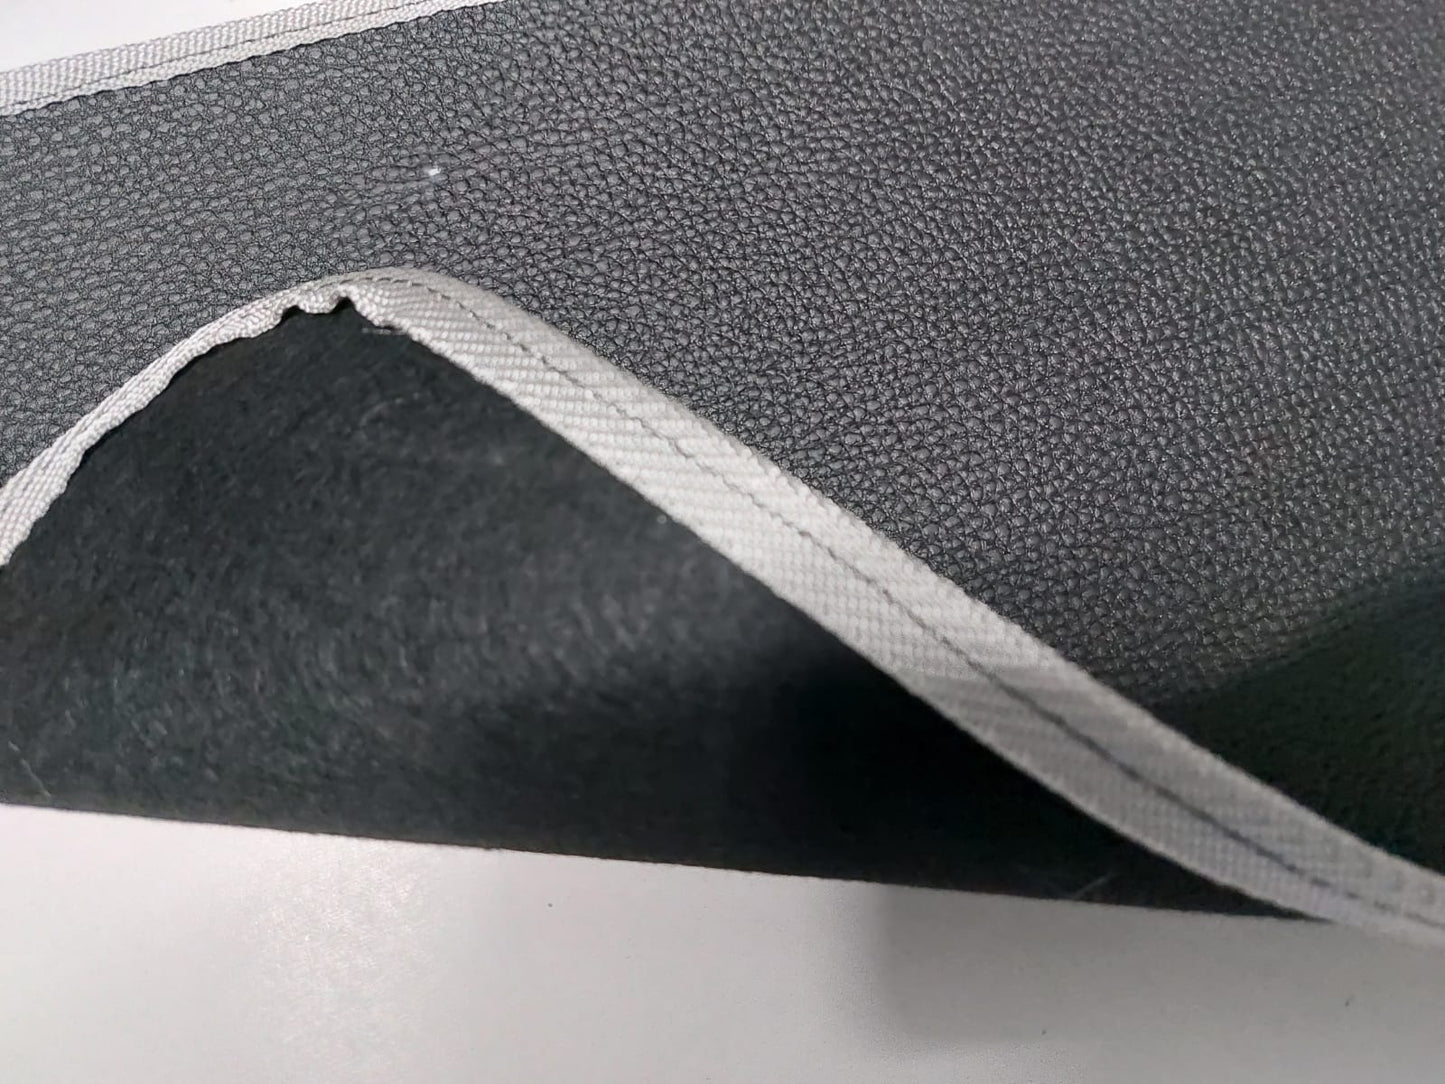 Mercedes-Benz Universal PVC Leather Floor Mats Set of 5